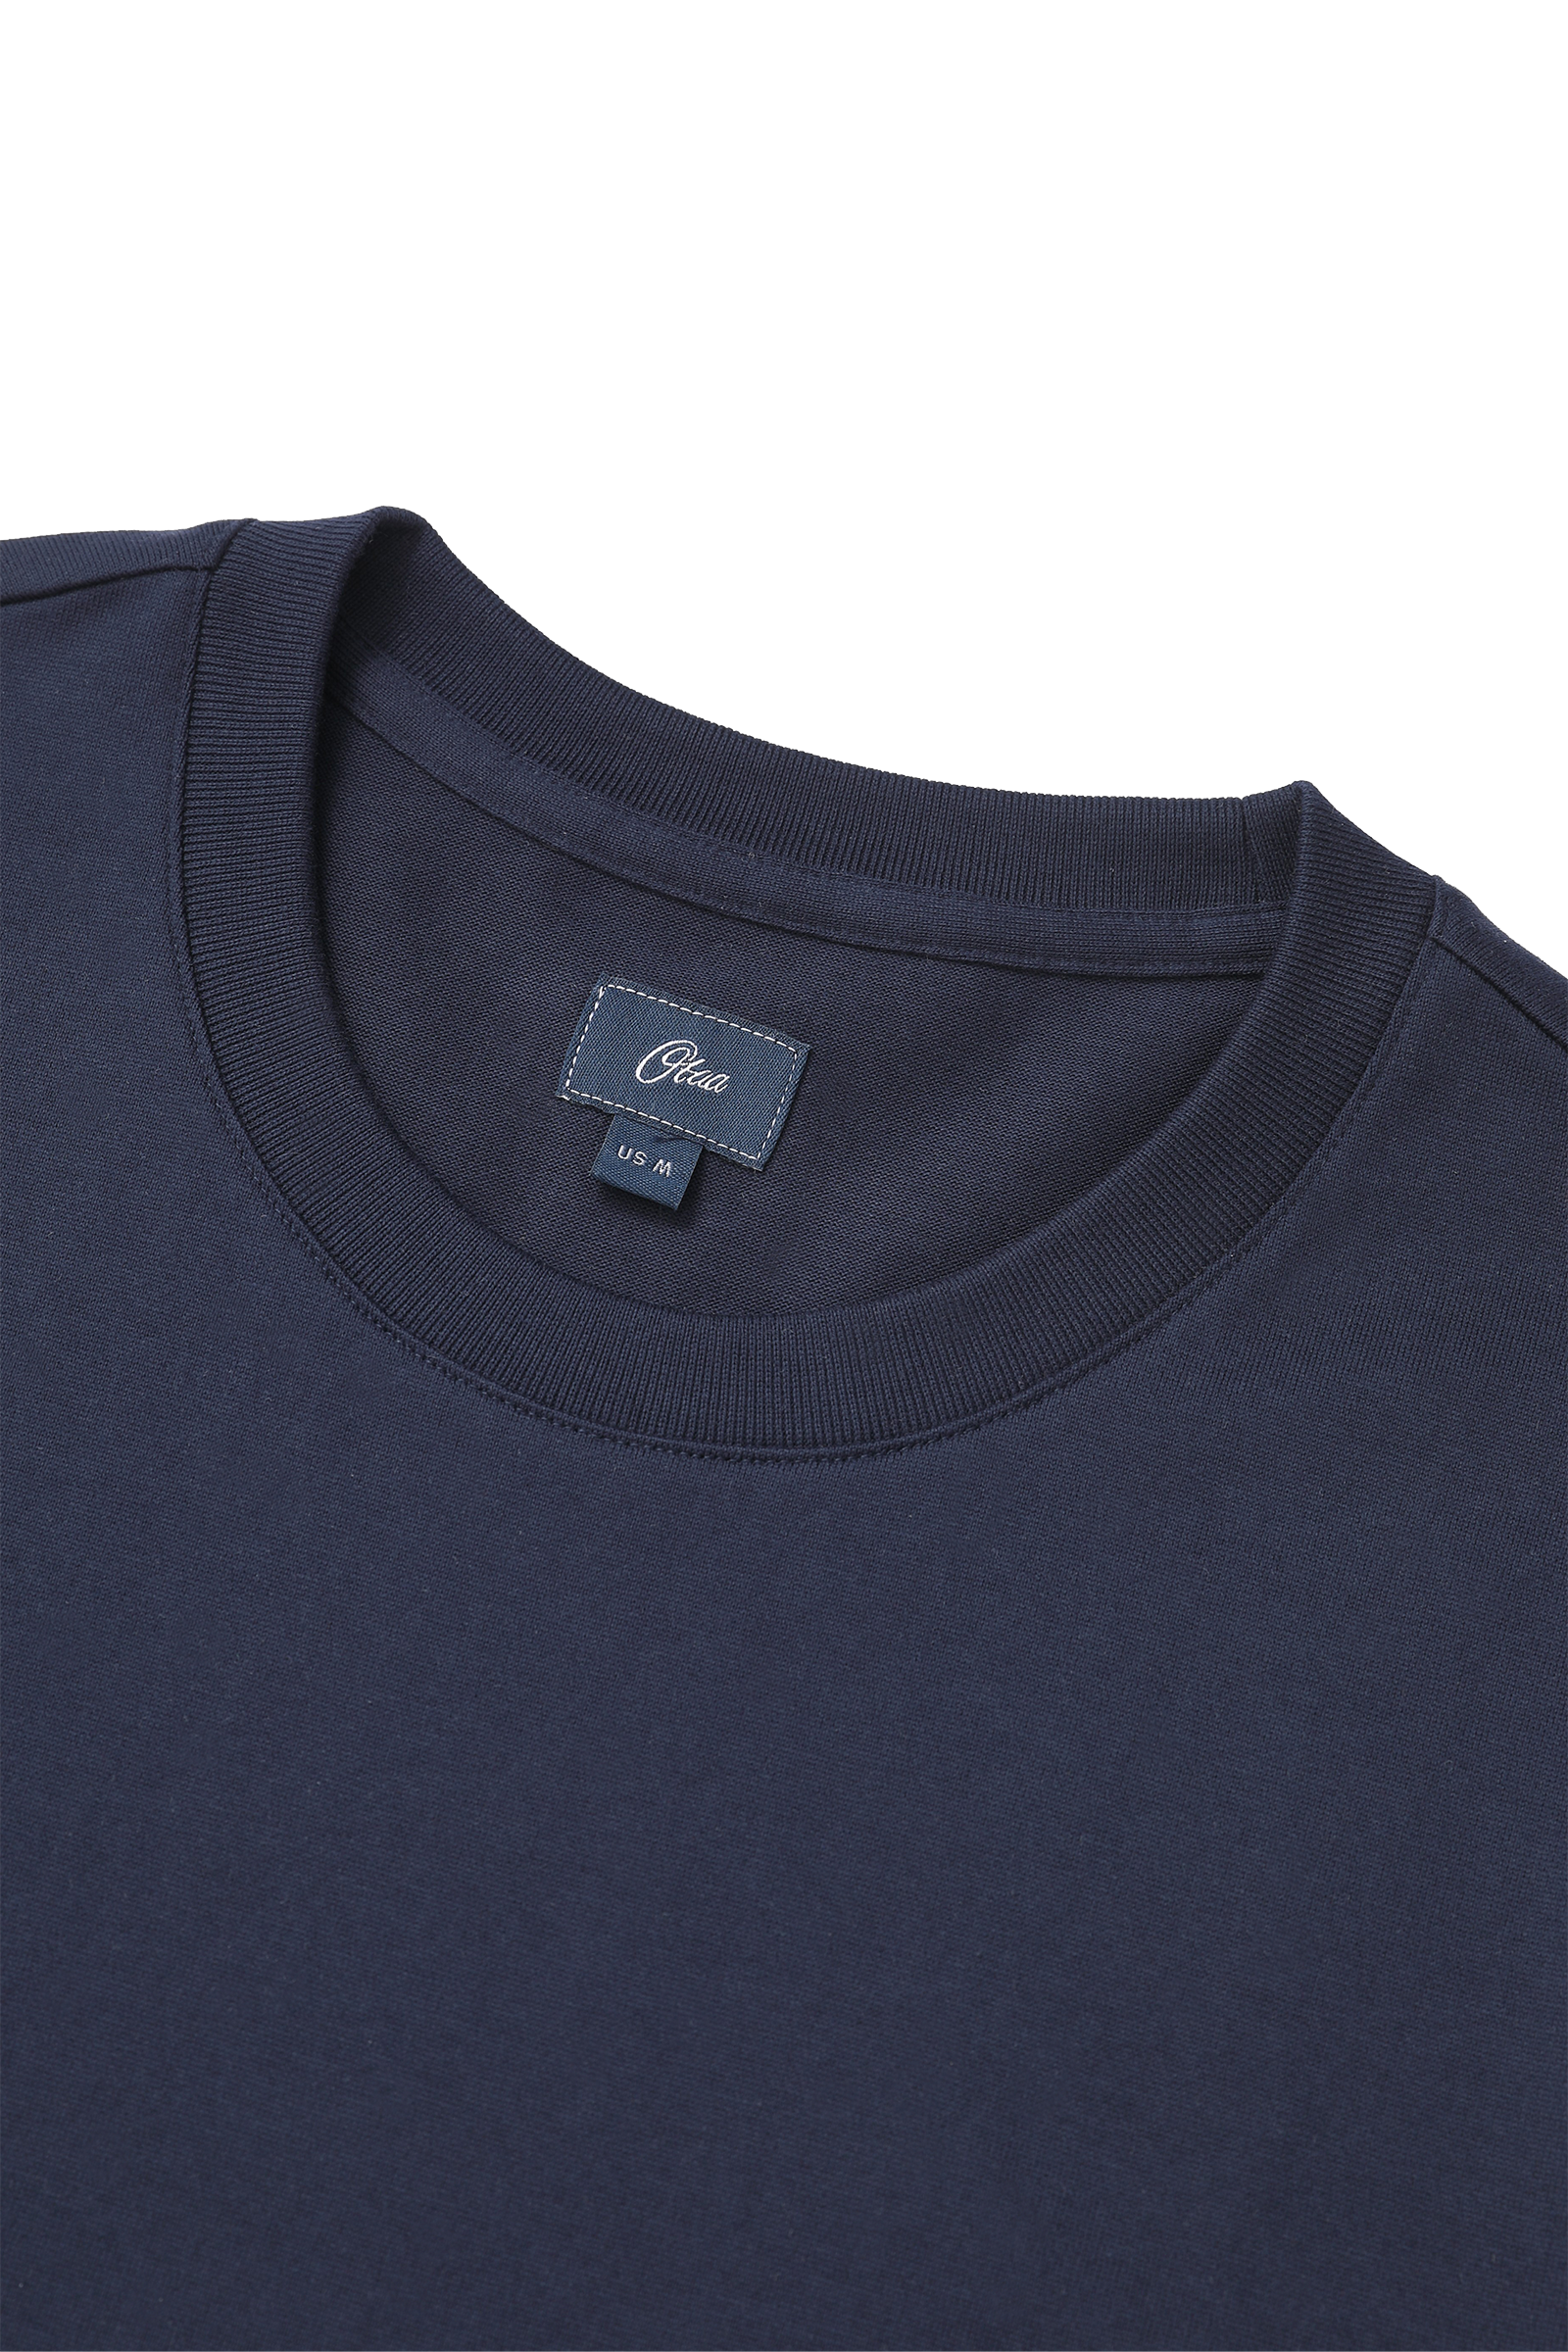 Navy Blue Slim Fit T-Shirt